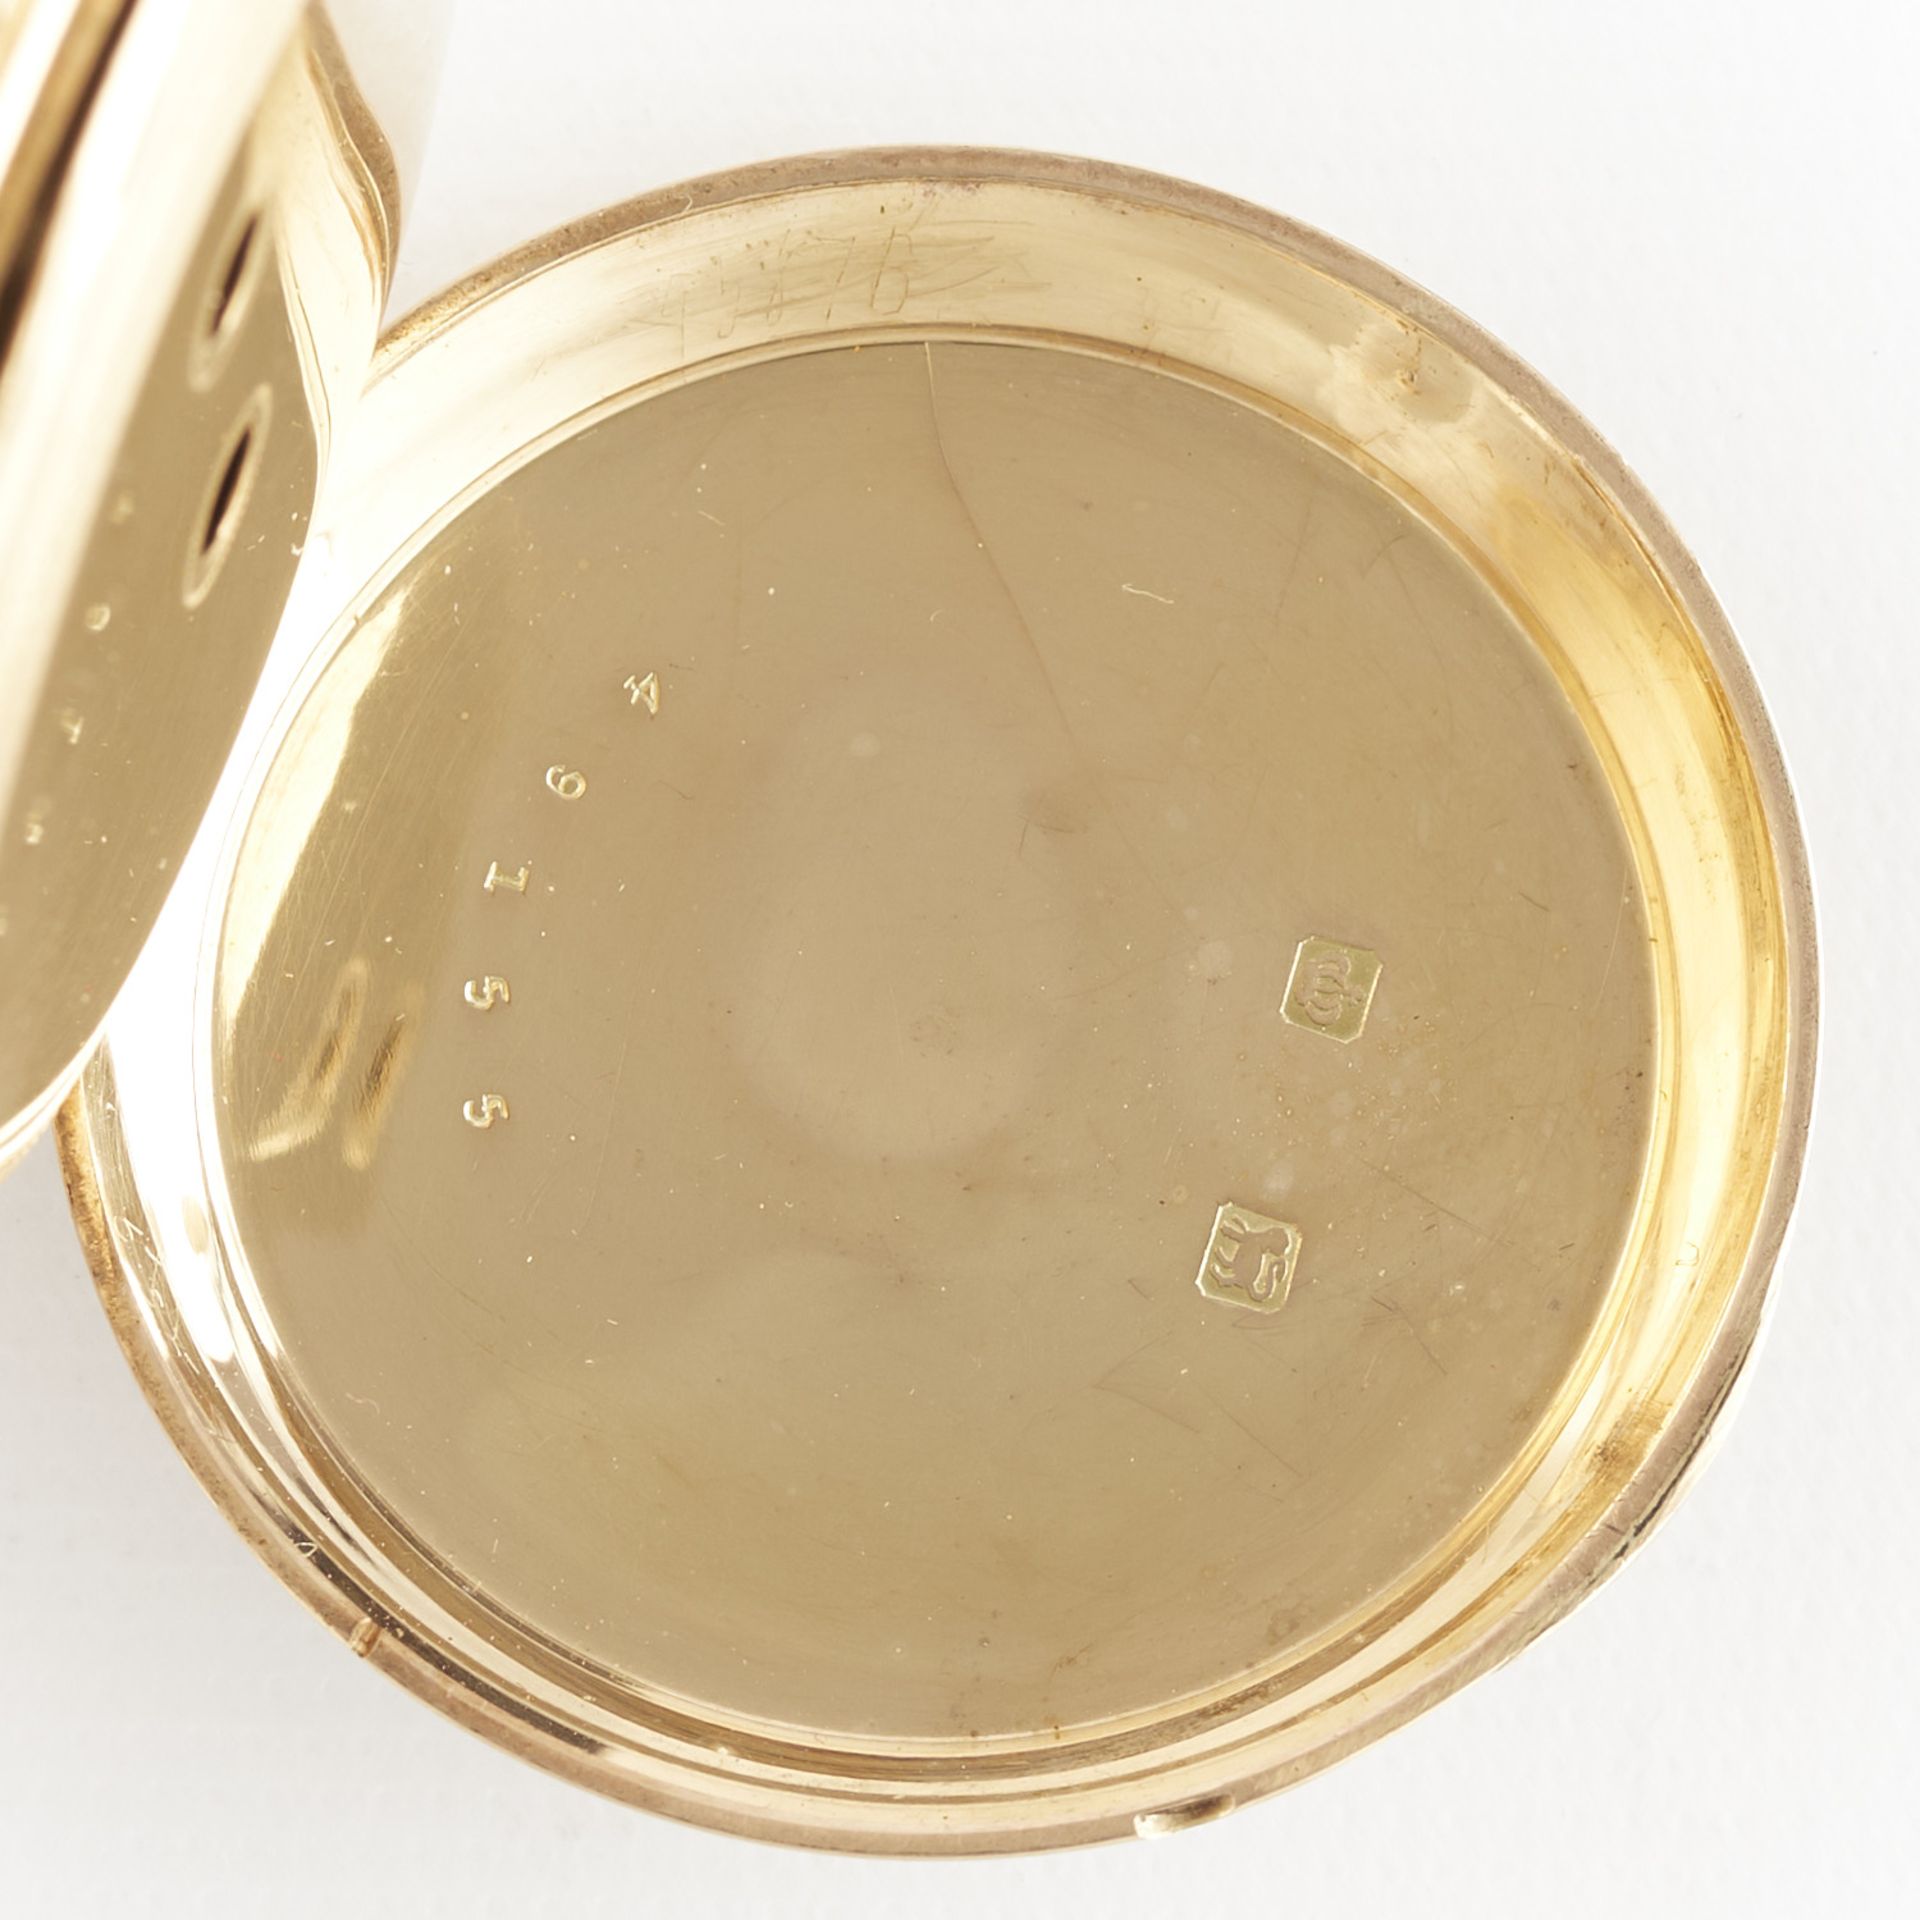 Am. Watch Co. William Ellery Pocket Watch - Image 7 of 8